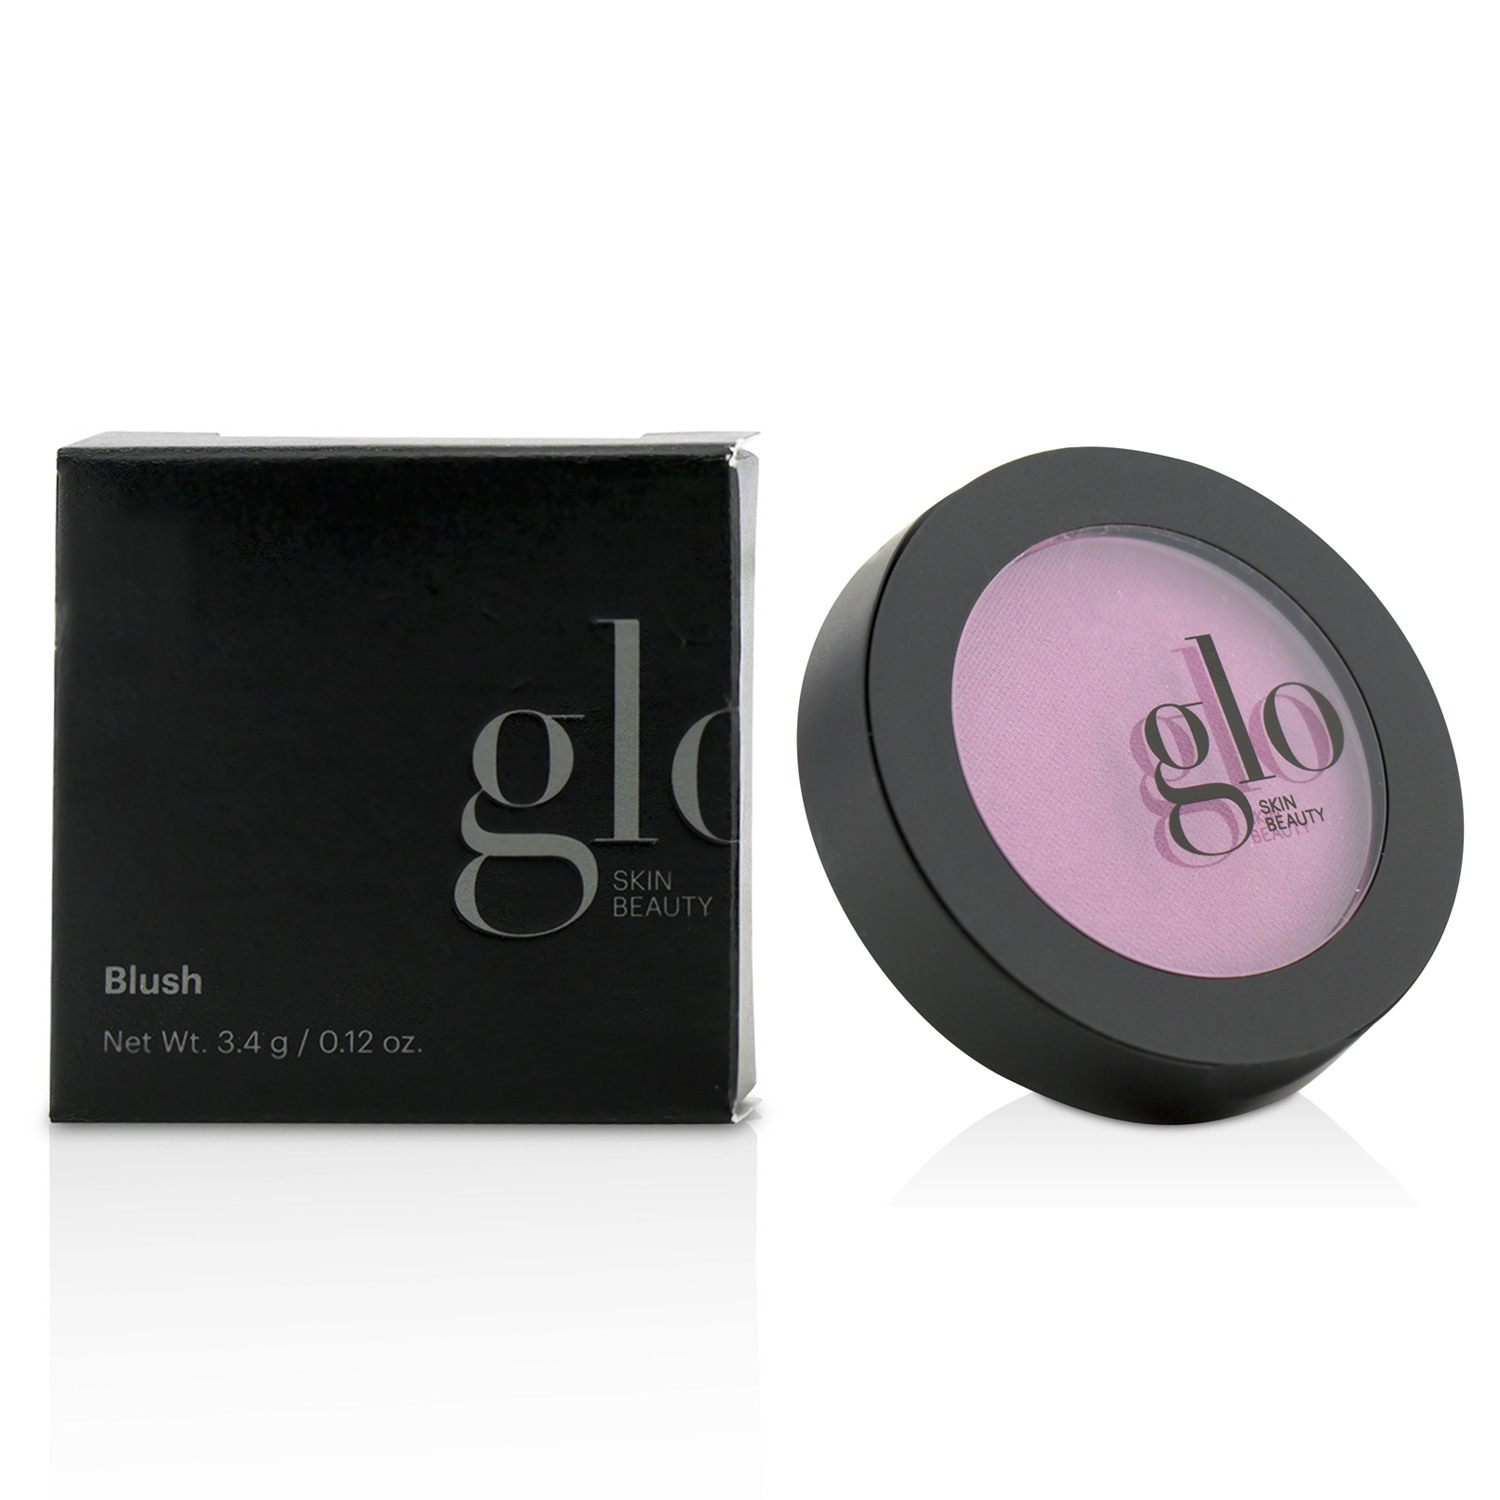 Blush - # Passion 10211 Glo Skin Beauty Image